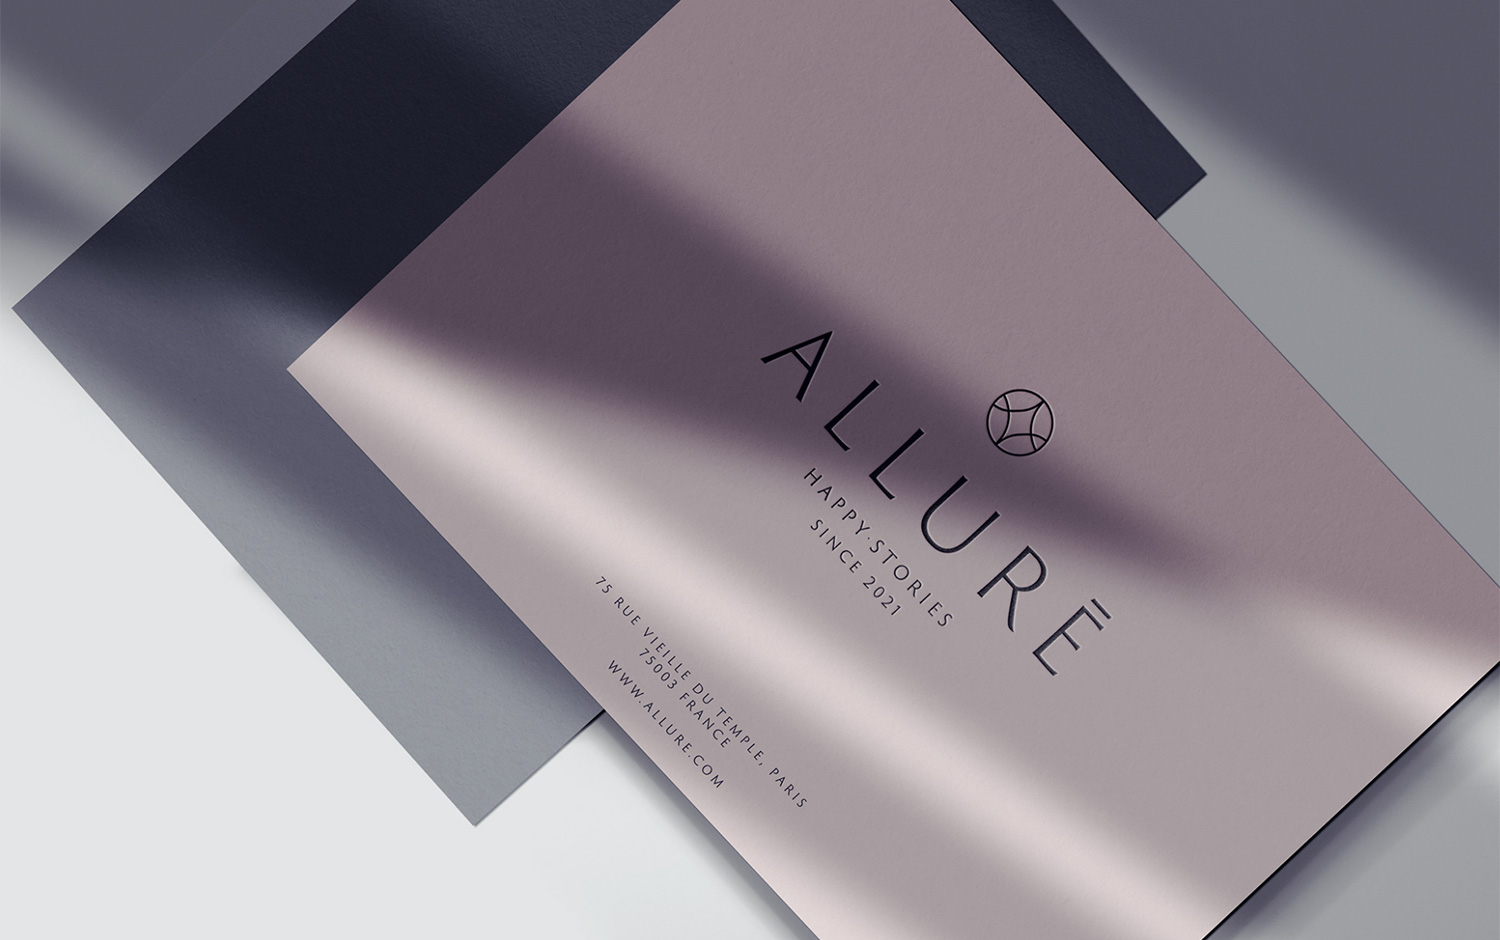 Allure Natural  Brand Identity :: Behance